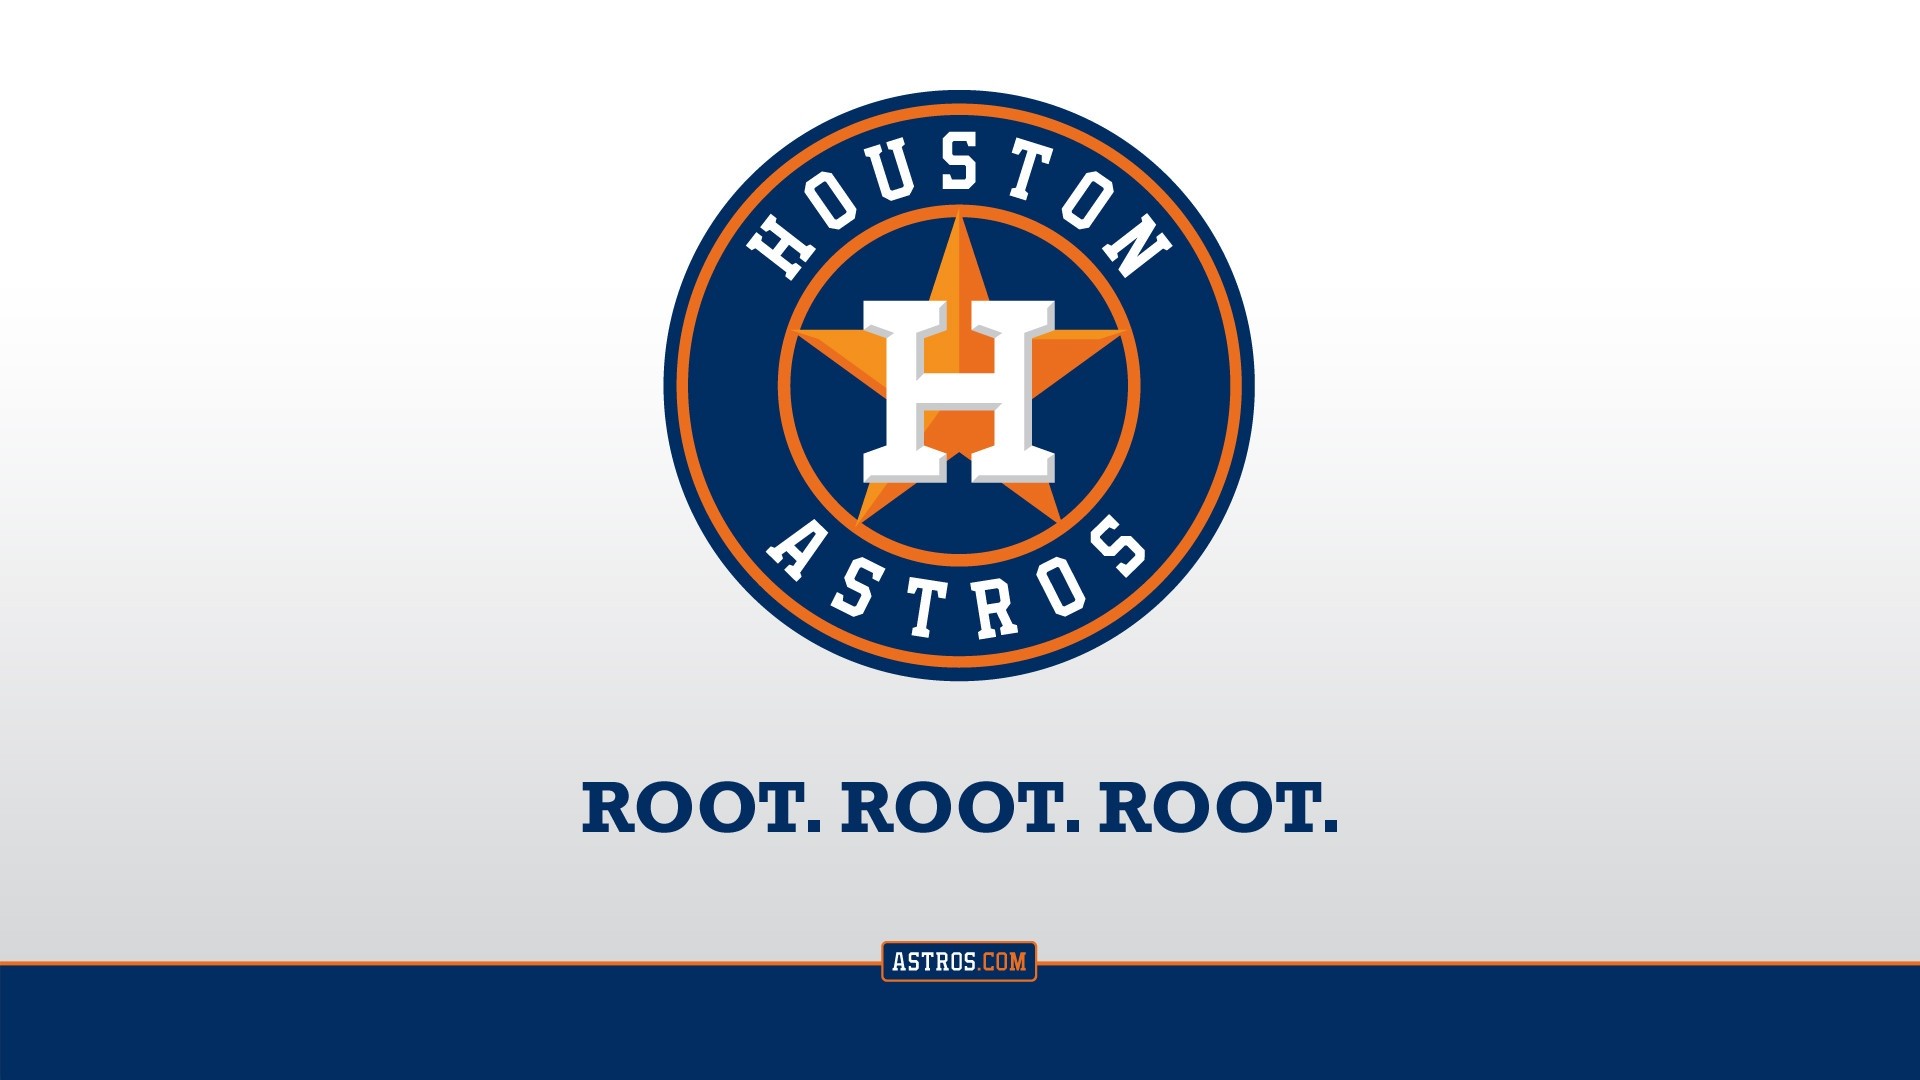 Houston Astros hd wallpaper download